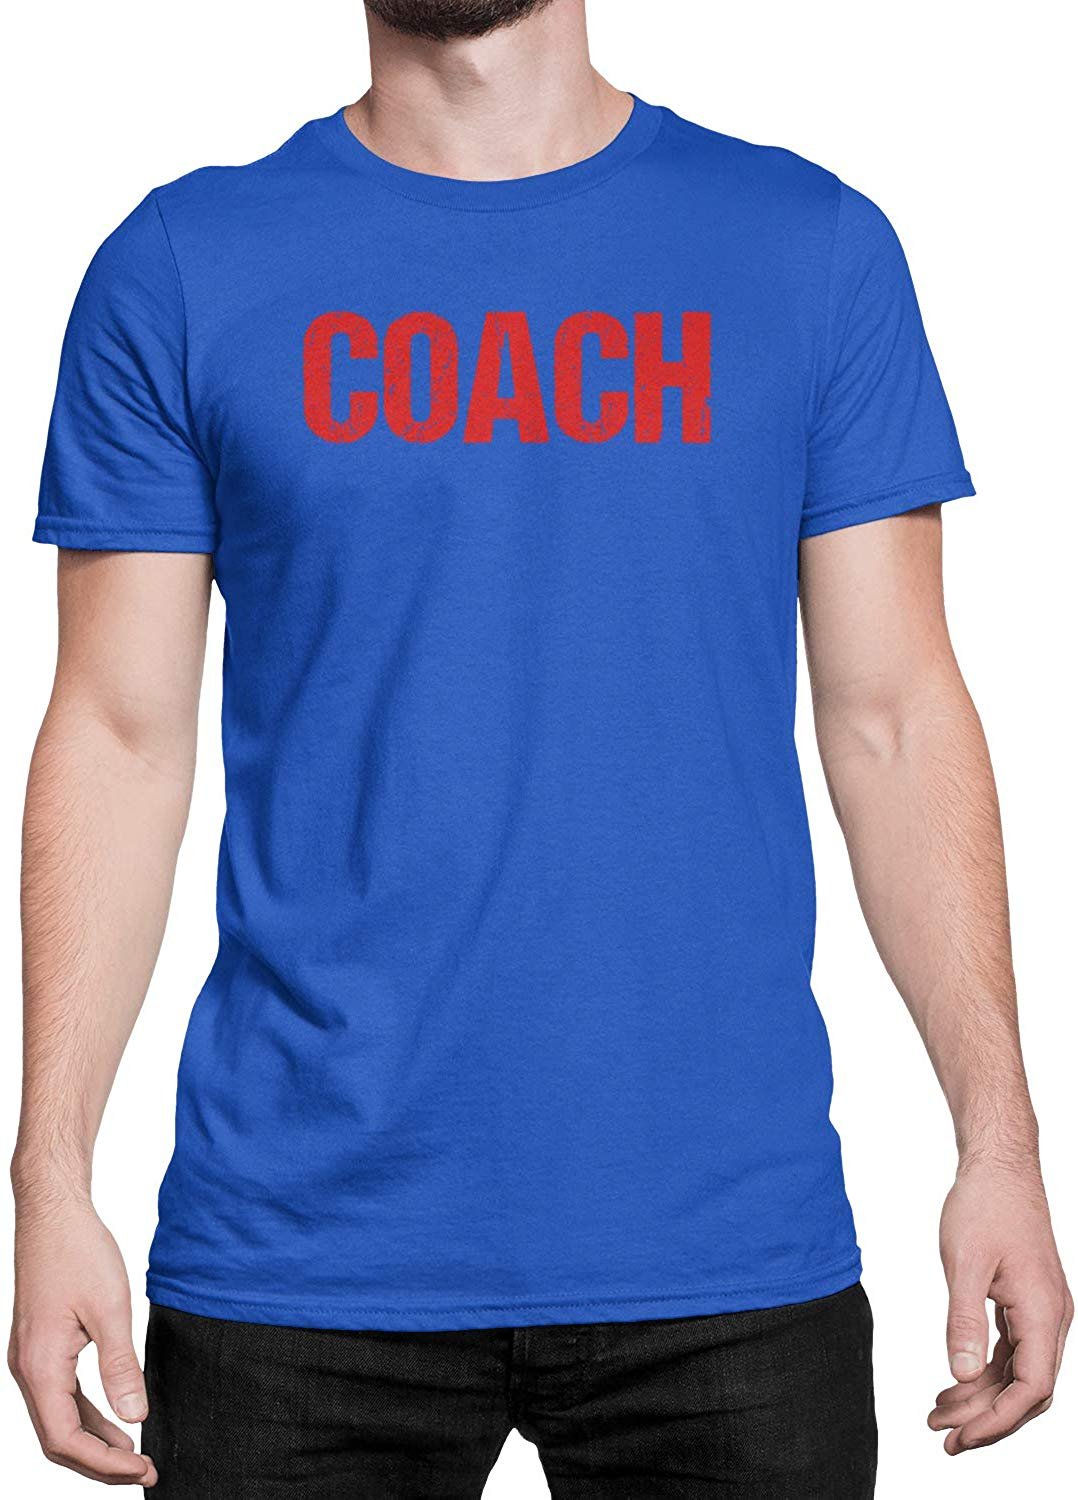 Coach T-Shirt Sports Coaching Tee Shirt (Royal & Red, Distressed)